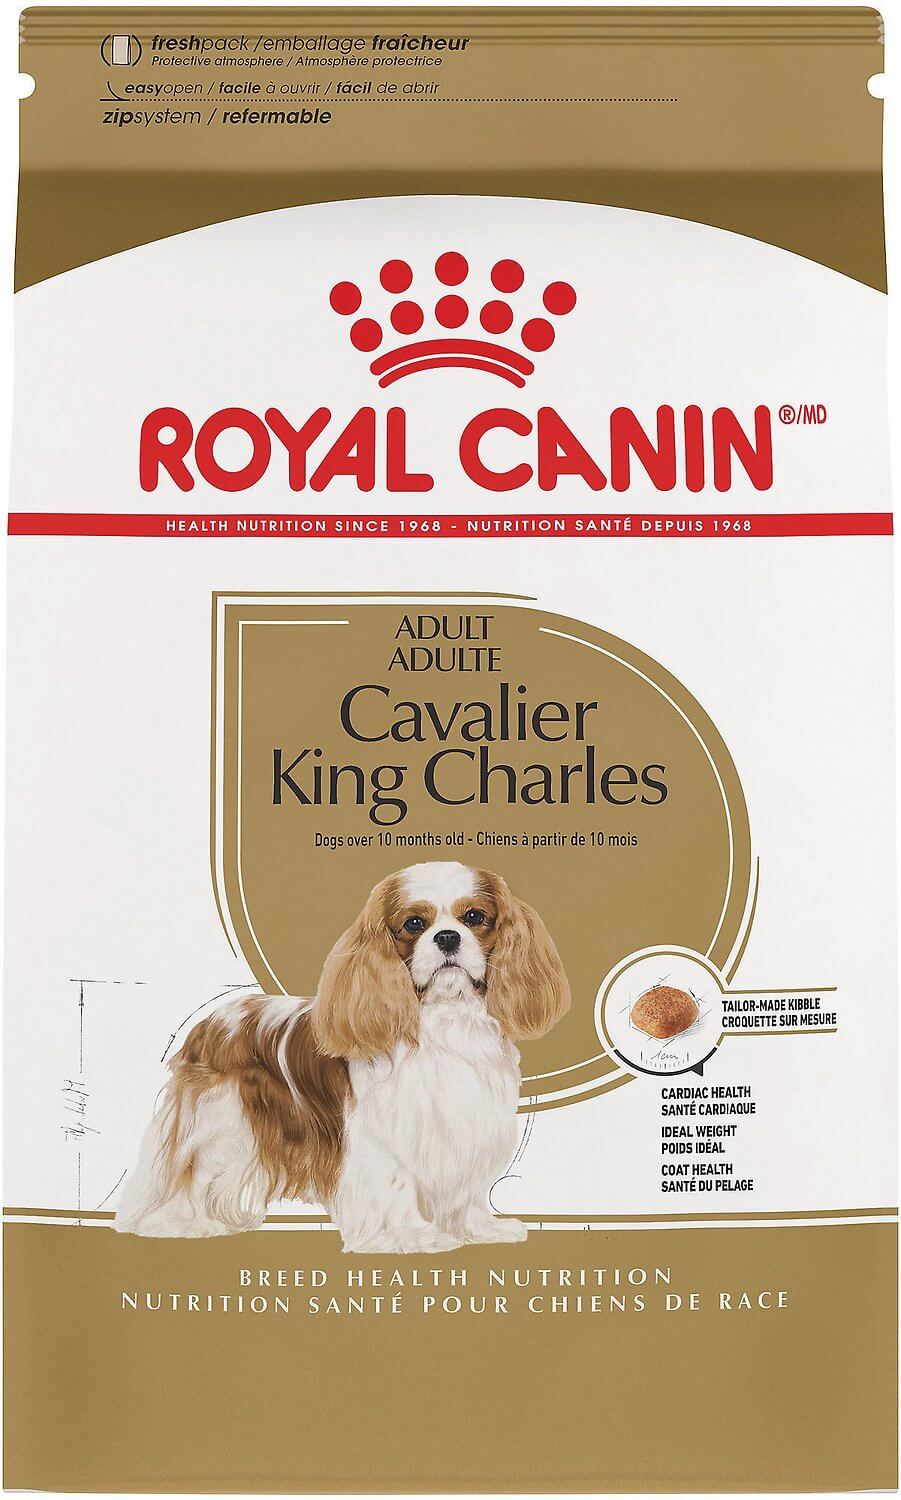 Royal Canin Dog Food Review Recalls Dog Food Advisor